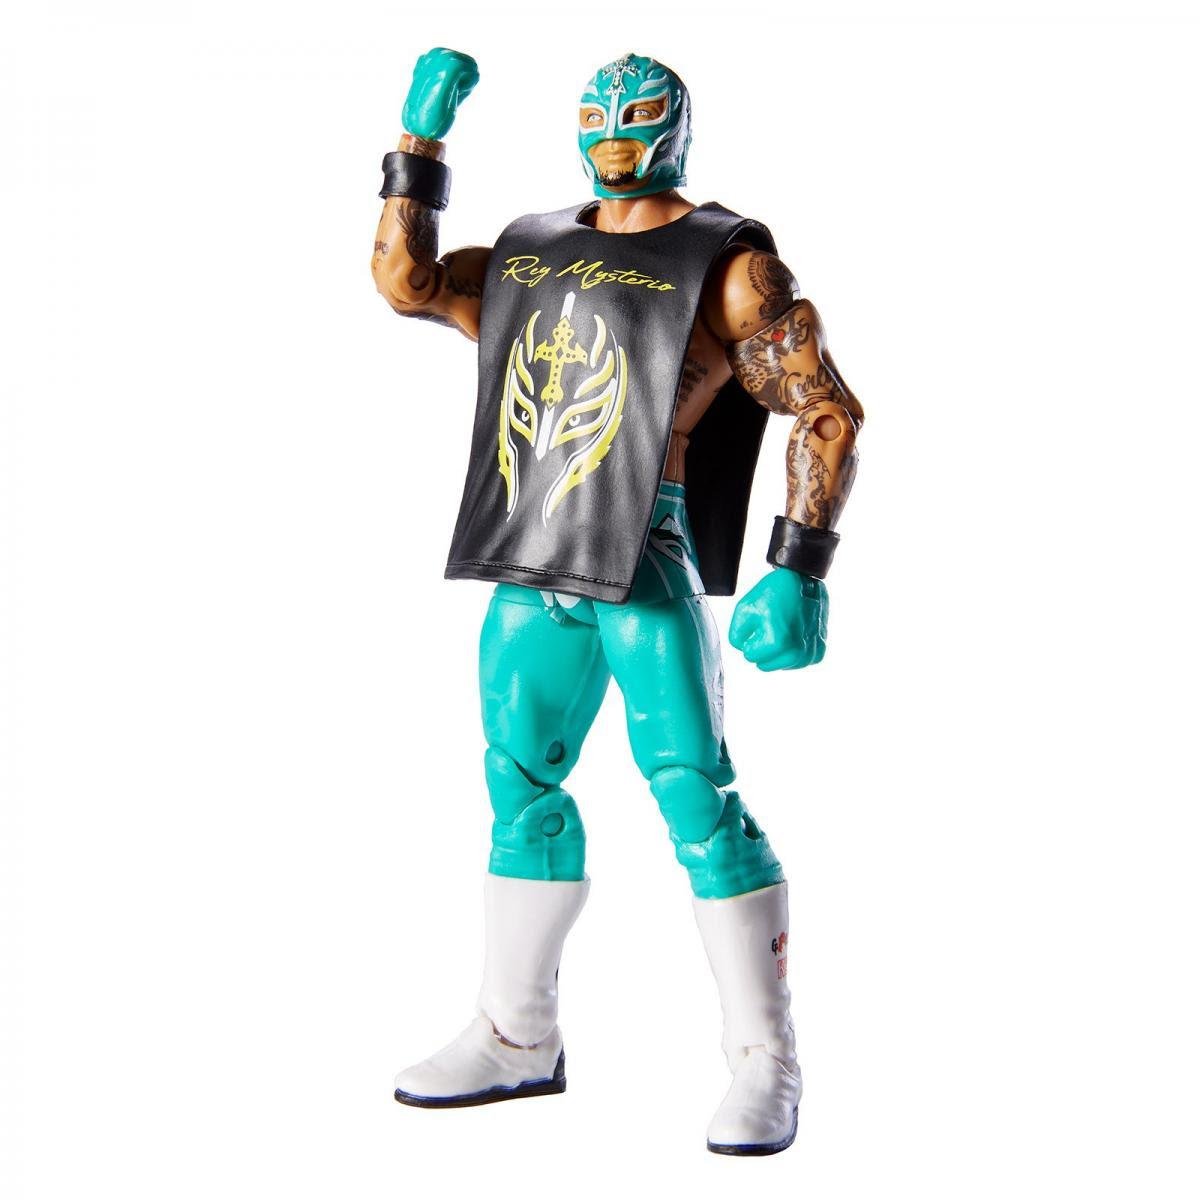 Image of WWE Wrestling Elite Series 69 - Rey Mysterio Action Figure